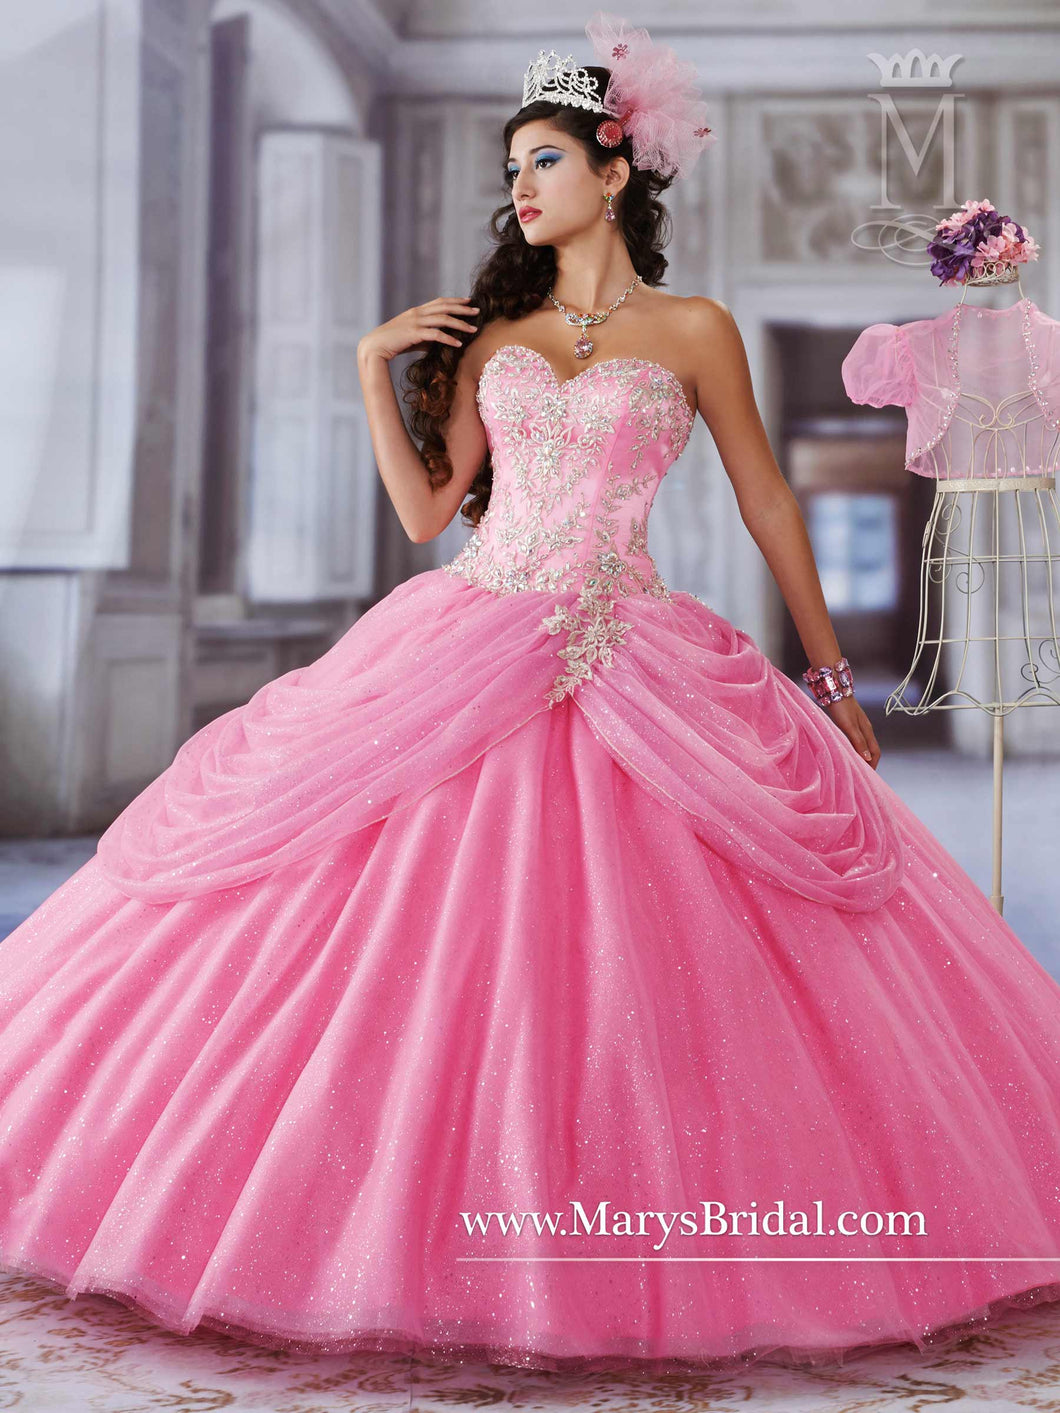 Glittery Princess Ballgown